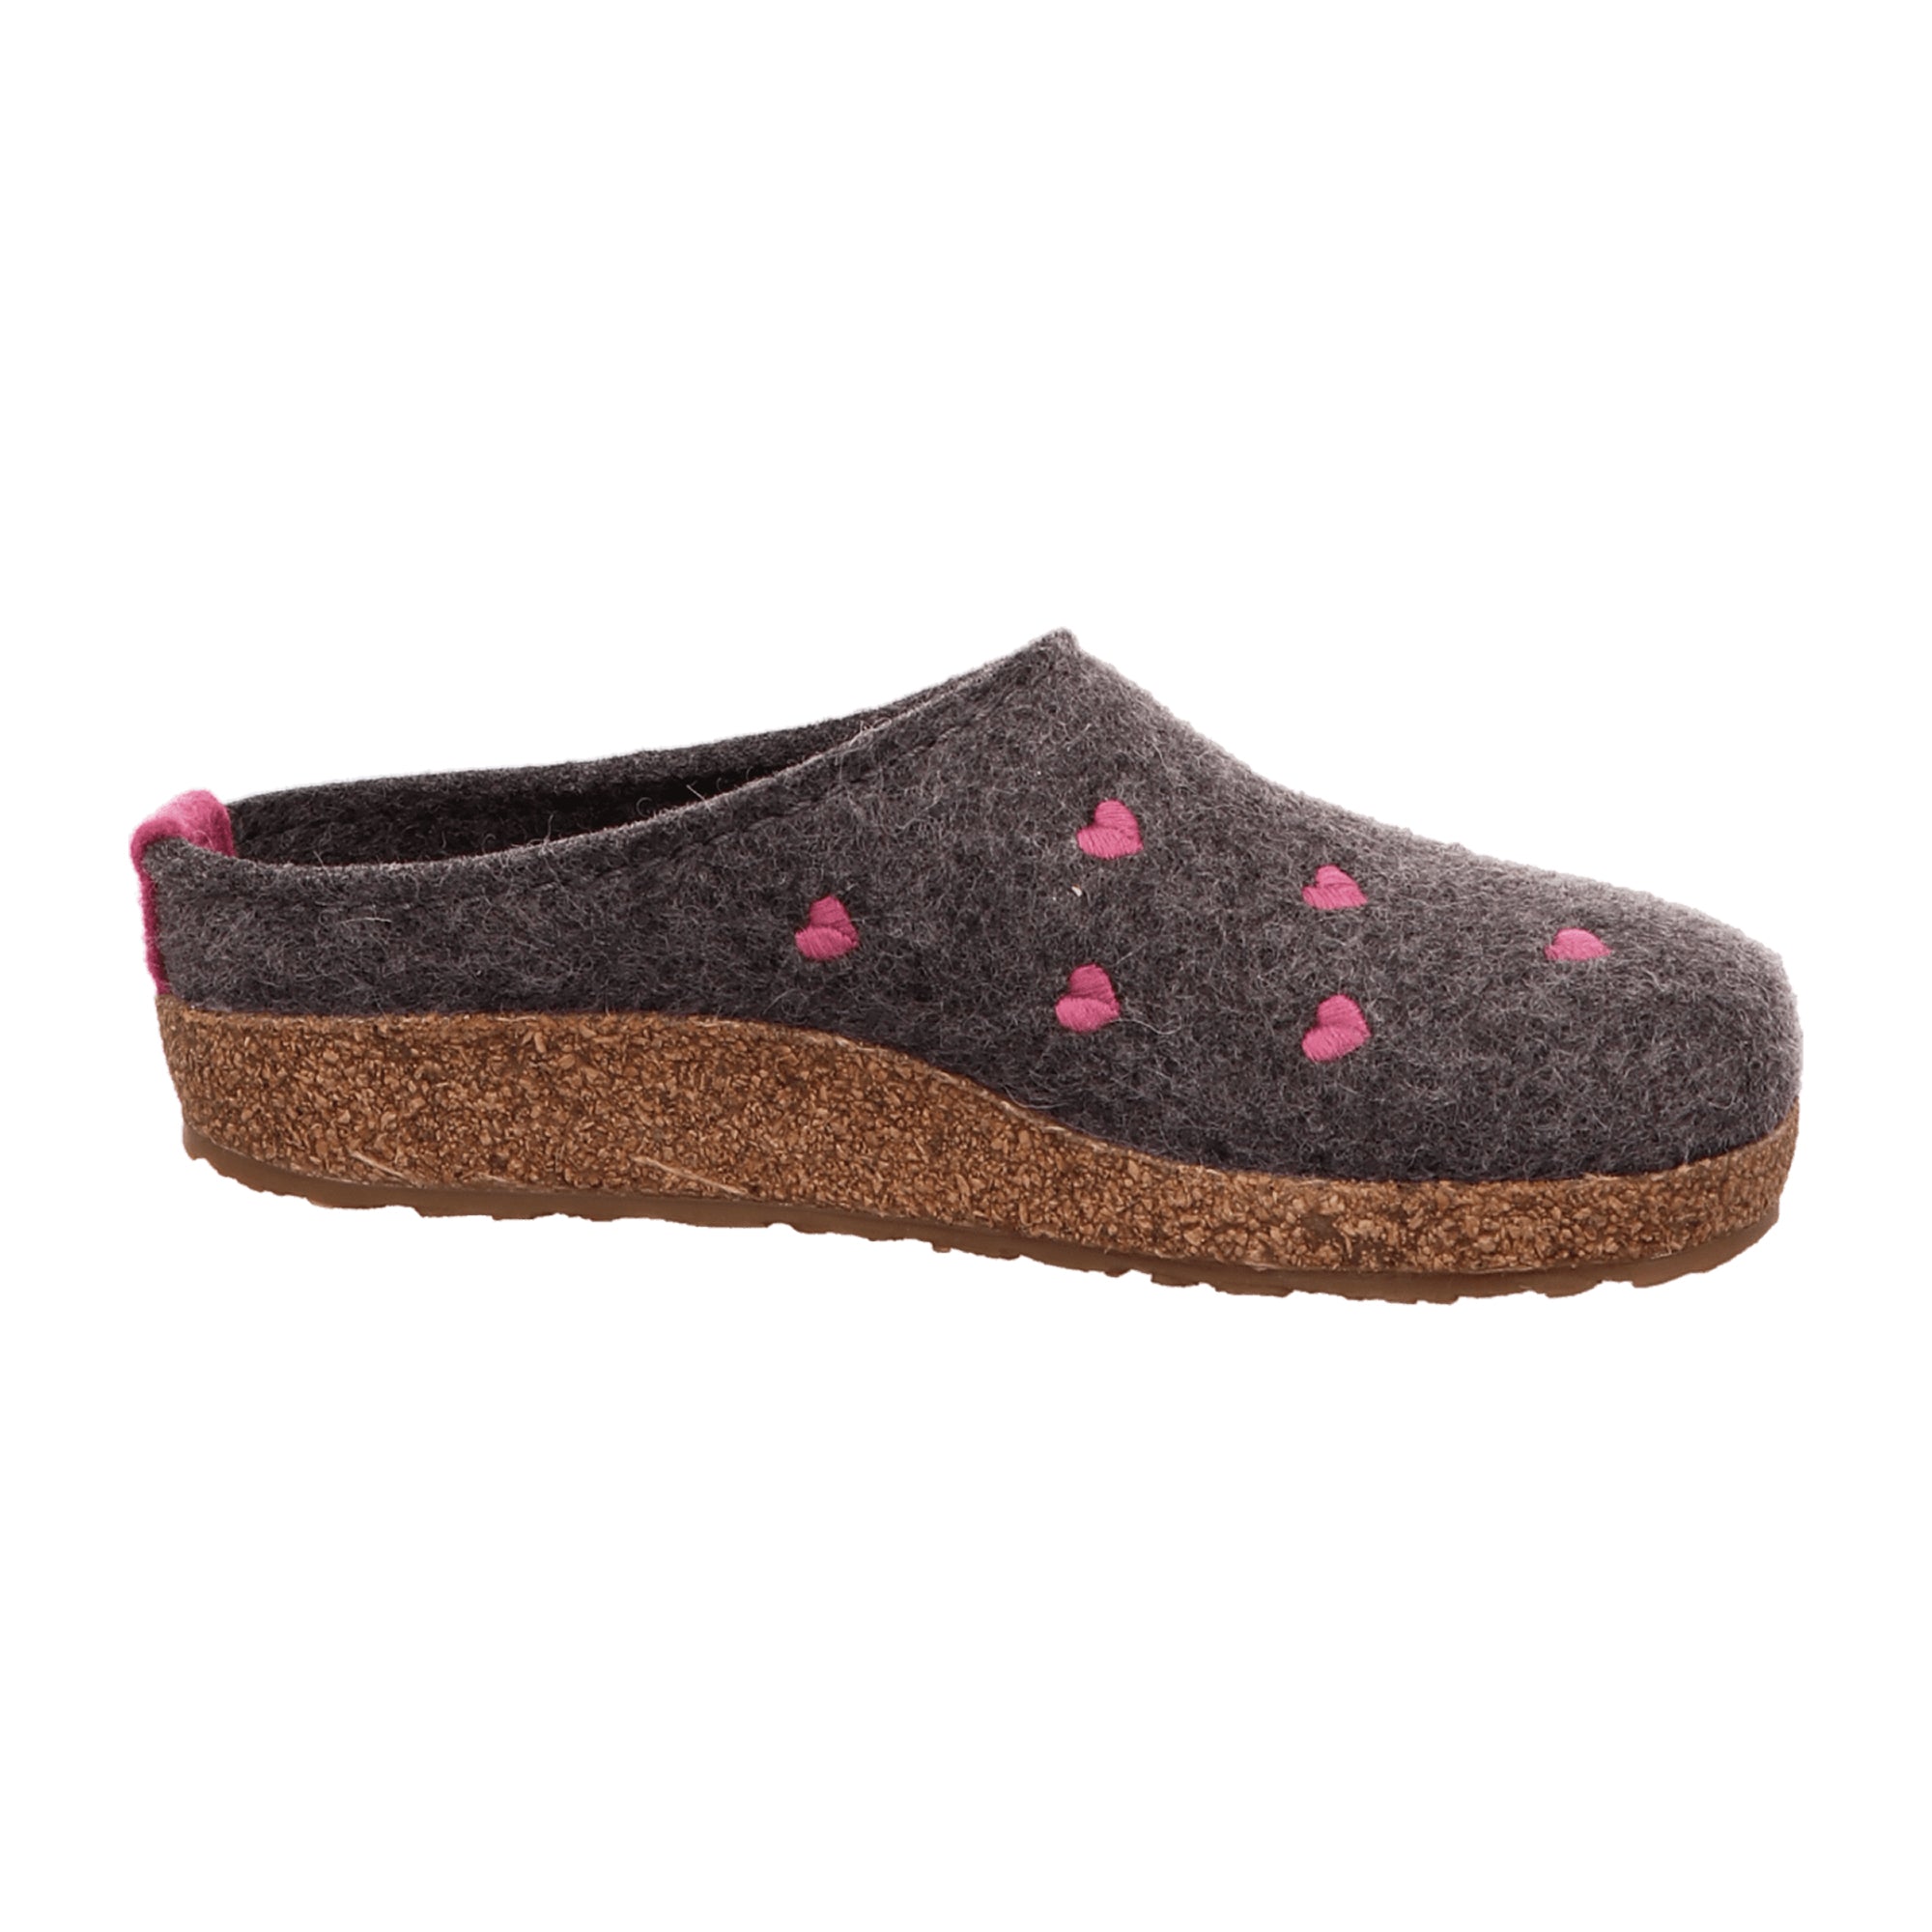 Haflinger Women's Slide Sandals - Stylish & Comfortable Gray Footwear